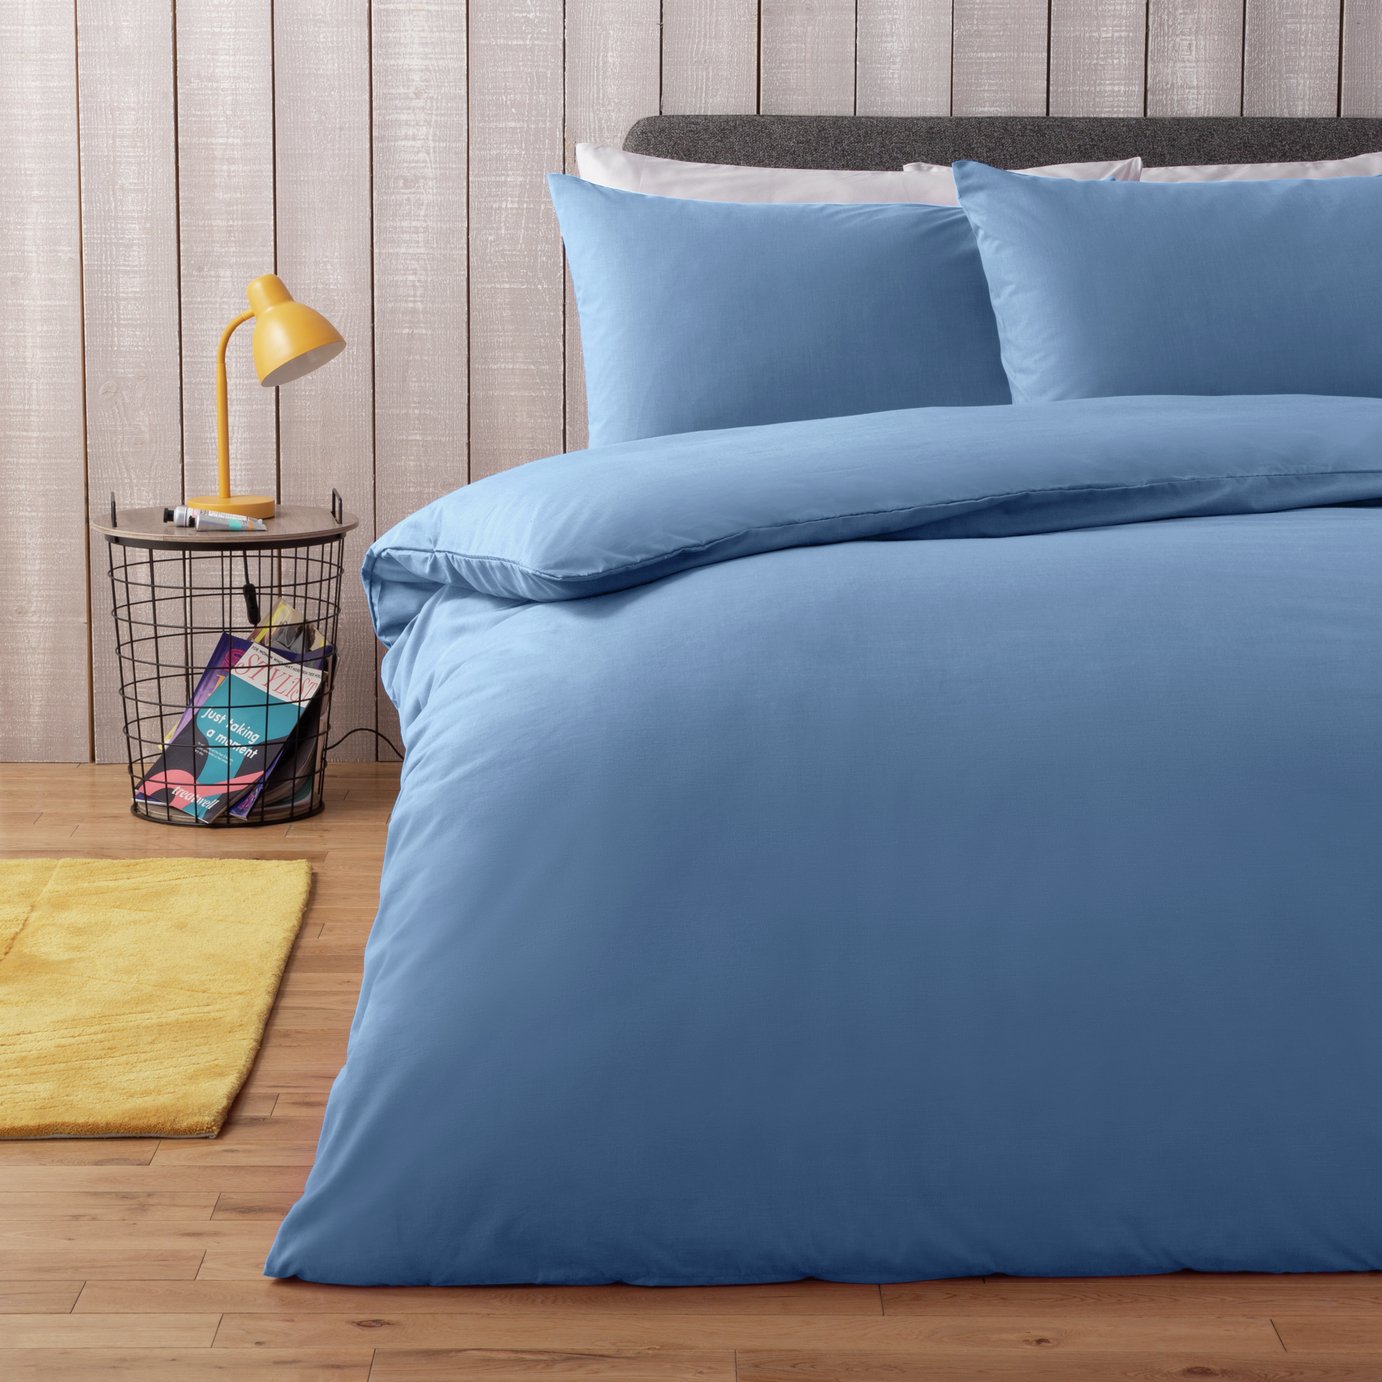 Argos Home Easycare Plain Blue Bedding Set - Single